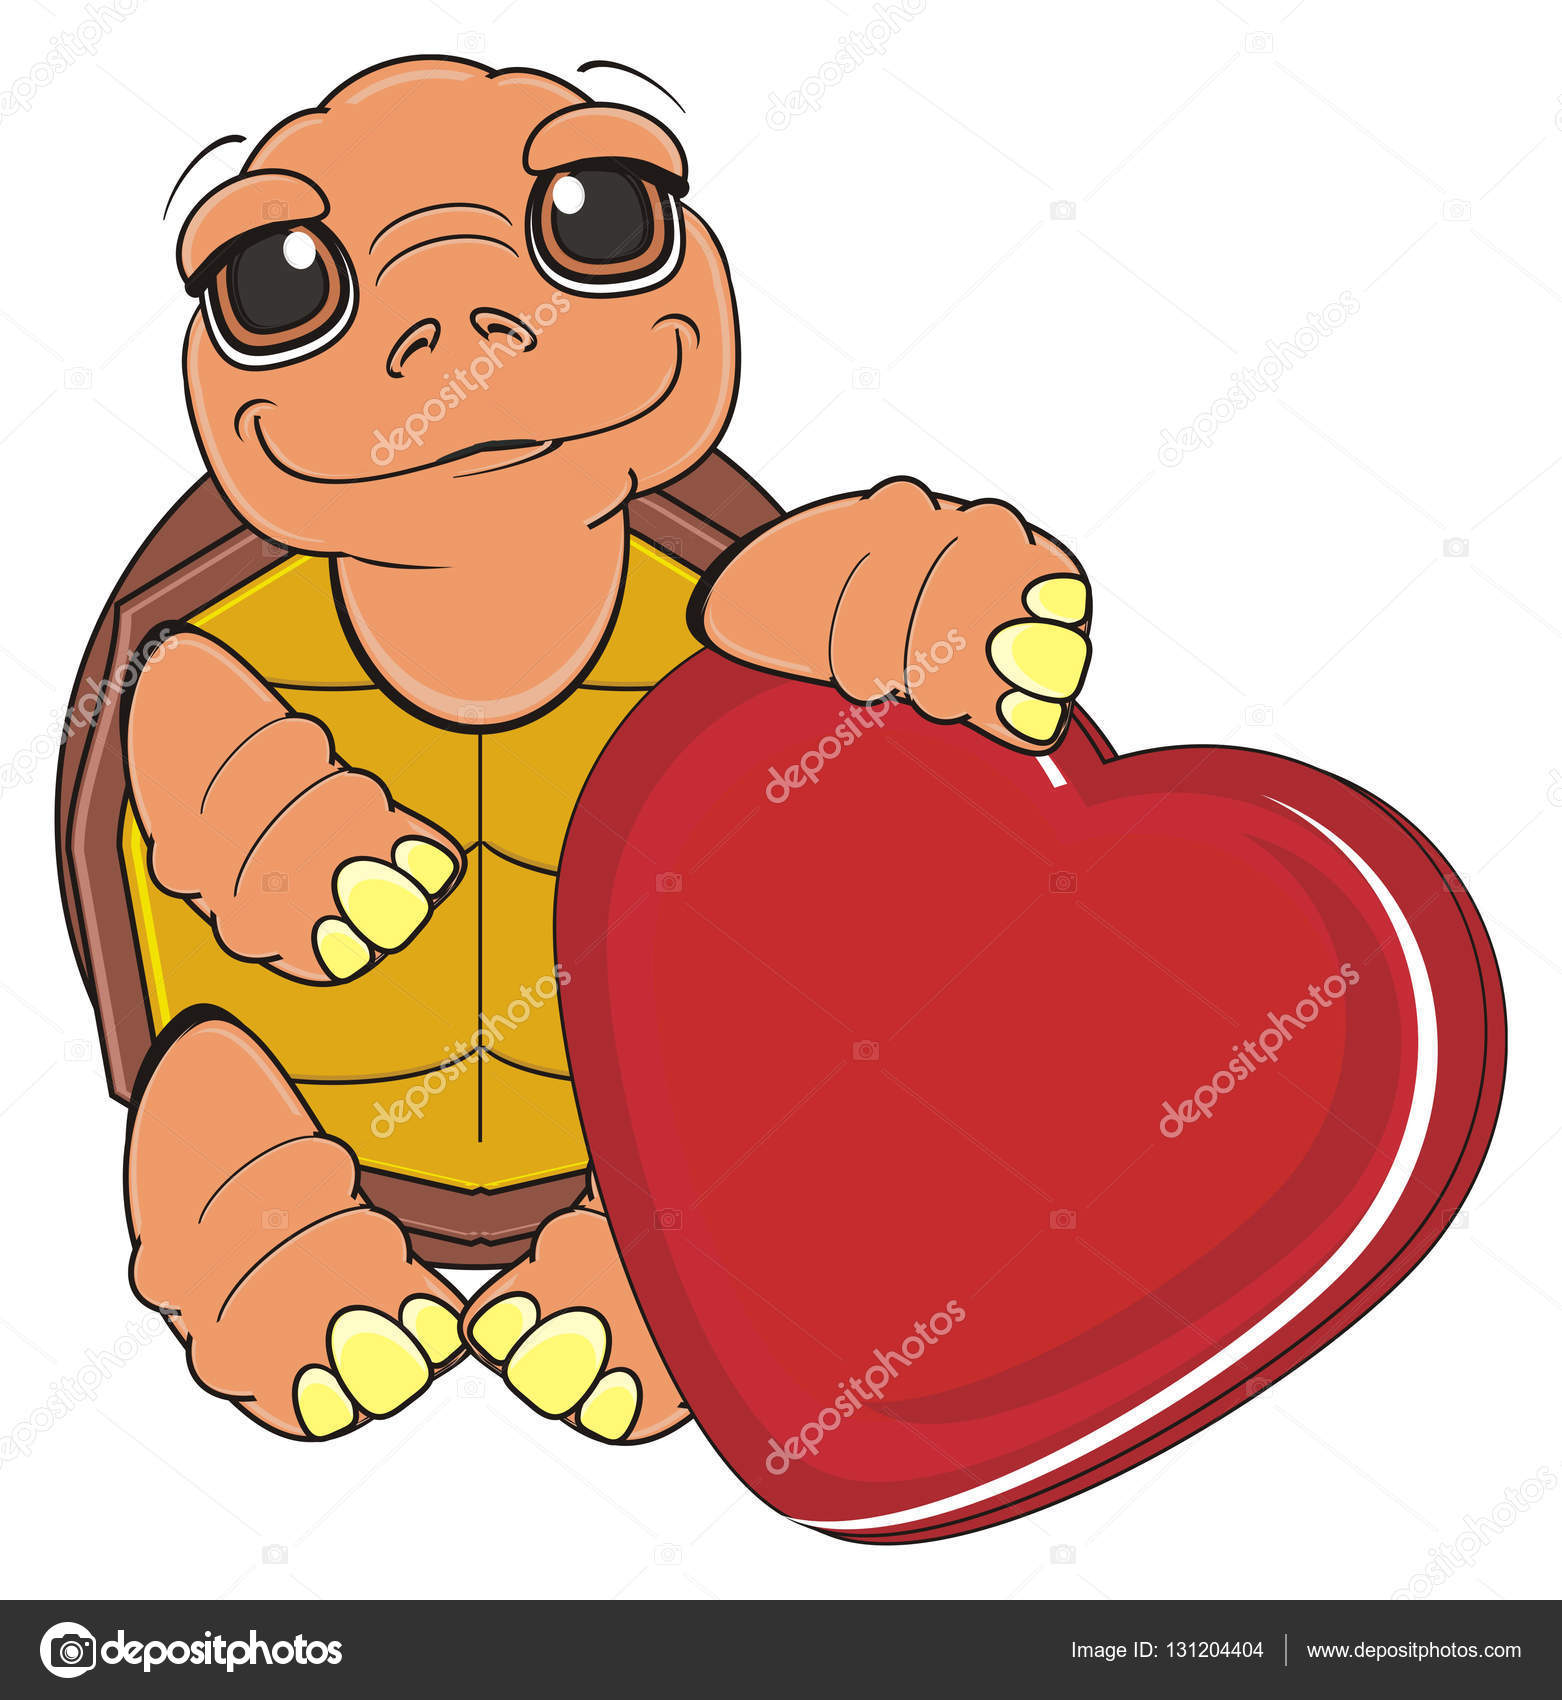 depositphotos_131204404-stock-photo-cute-smiling-brown-turtle.jpg